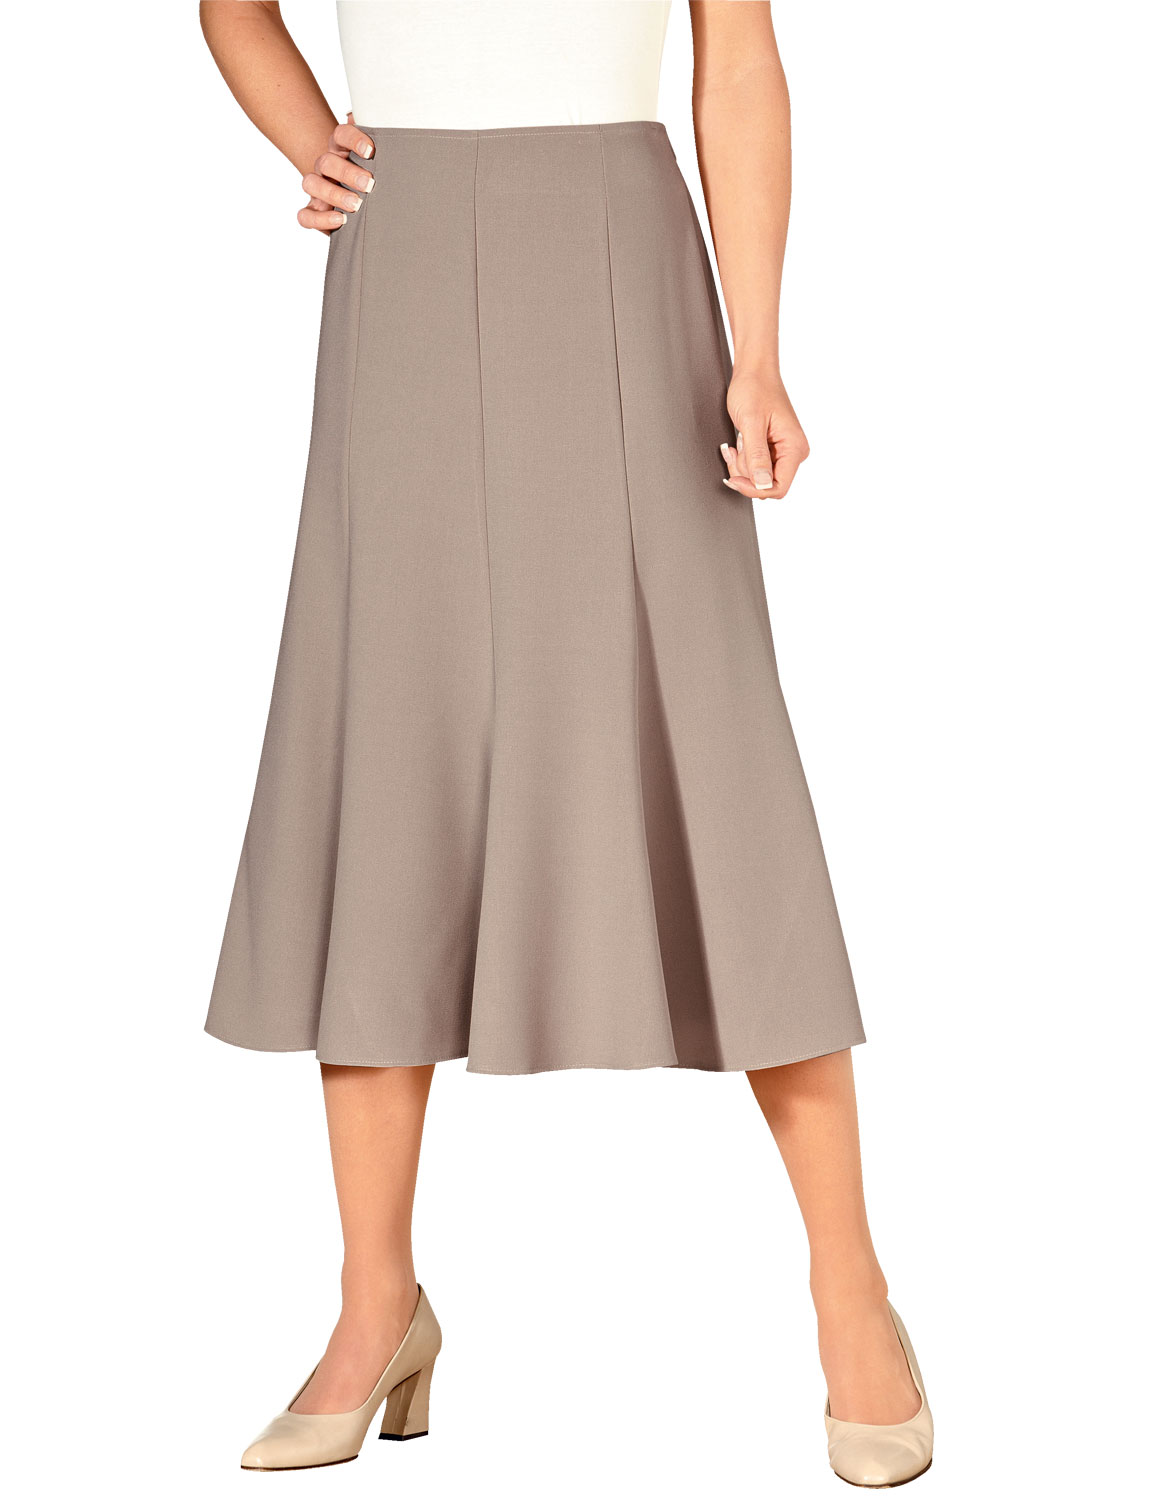 Ladies Panel Skirt 25 Inches | eBay